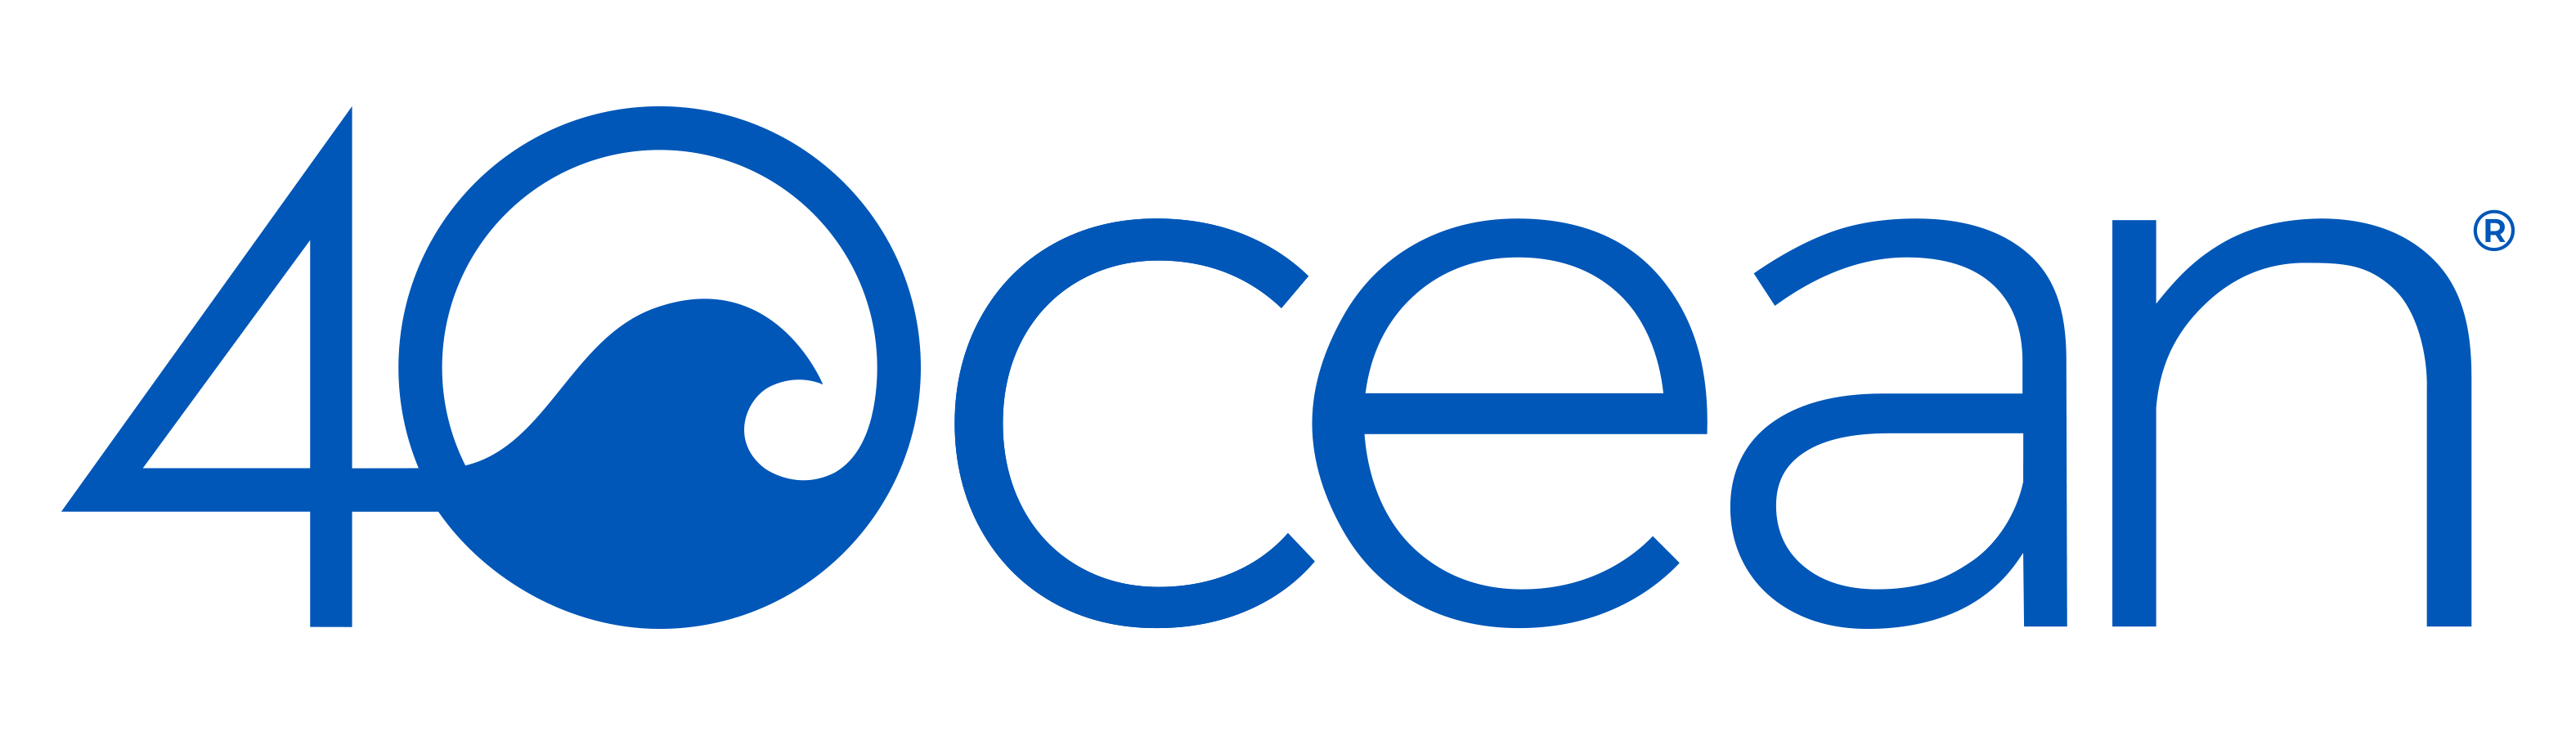 4 OCEAN * Breast Cancer Awareness Month * Logo_Blue